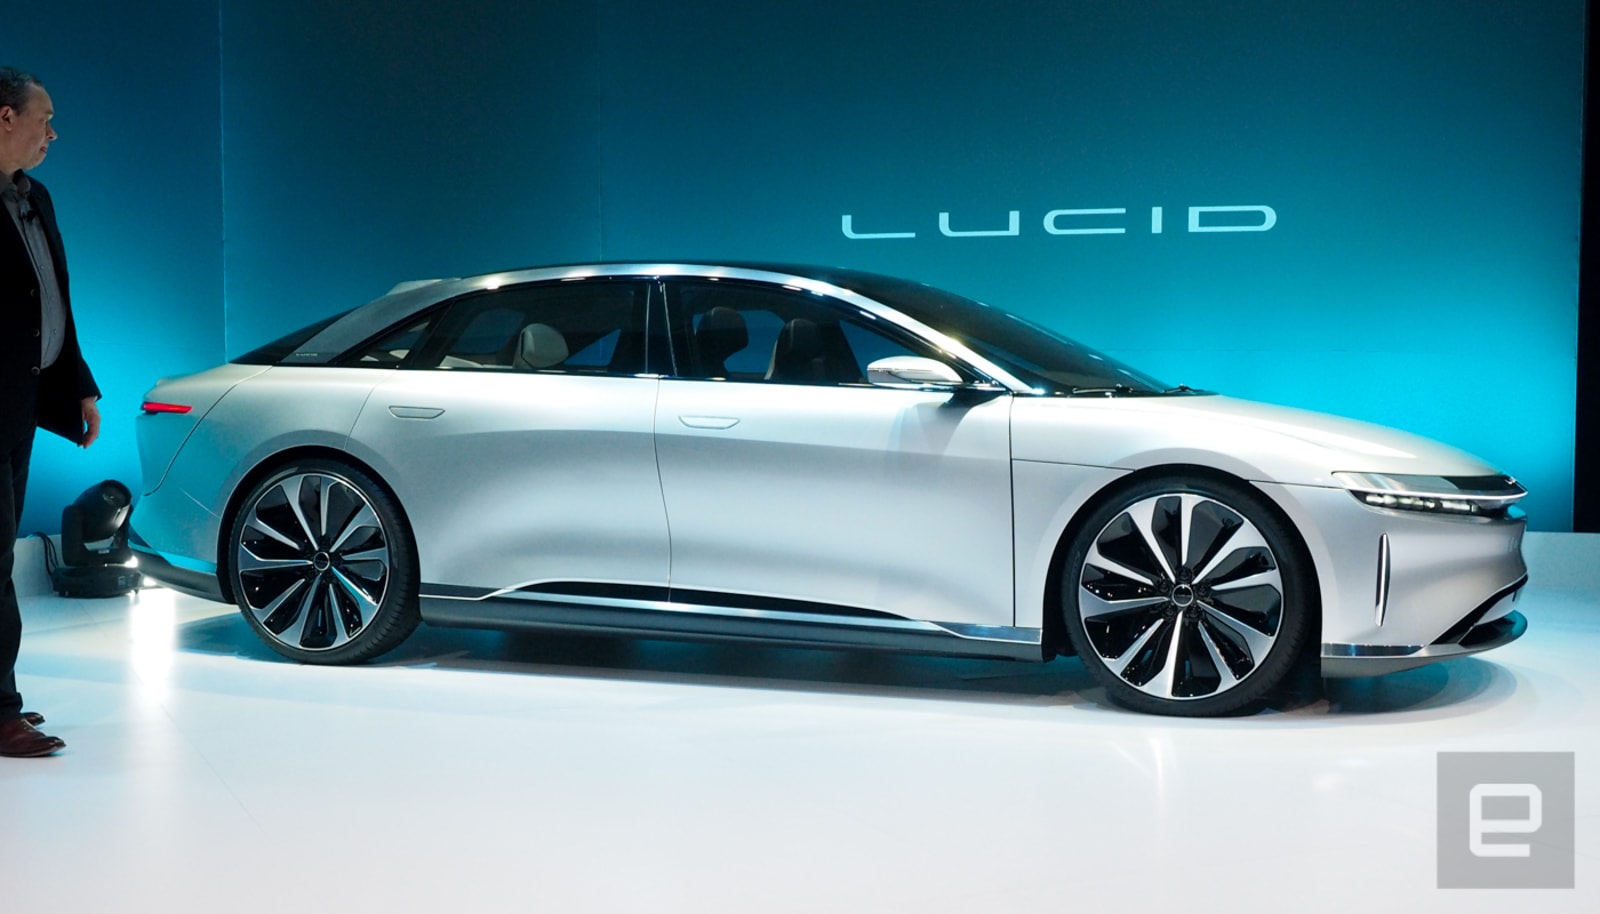 Lucid Motors is struggling to produce its luxury EV